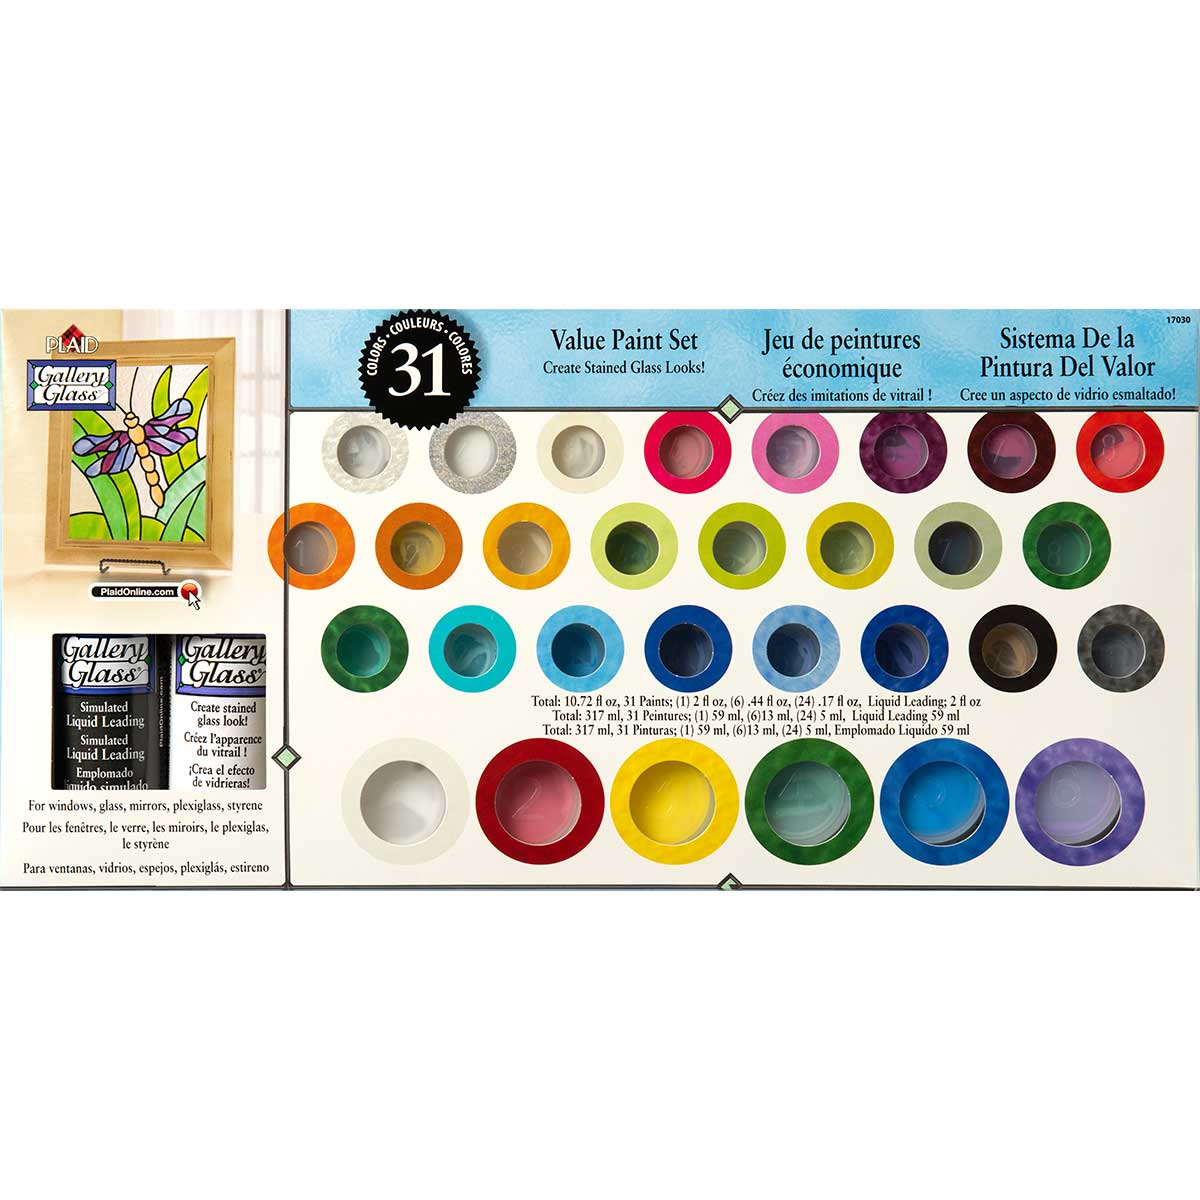 Gallery Glass ® Window Color™ Sets - Value Paint Set - 17030